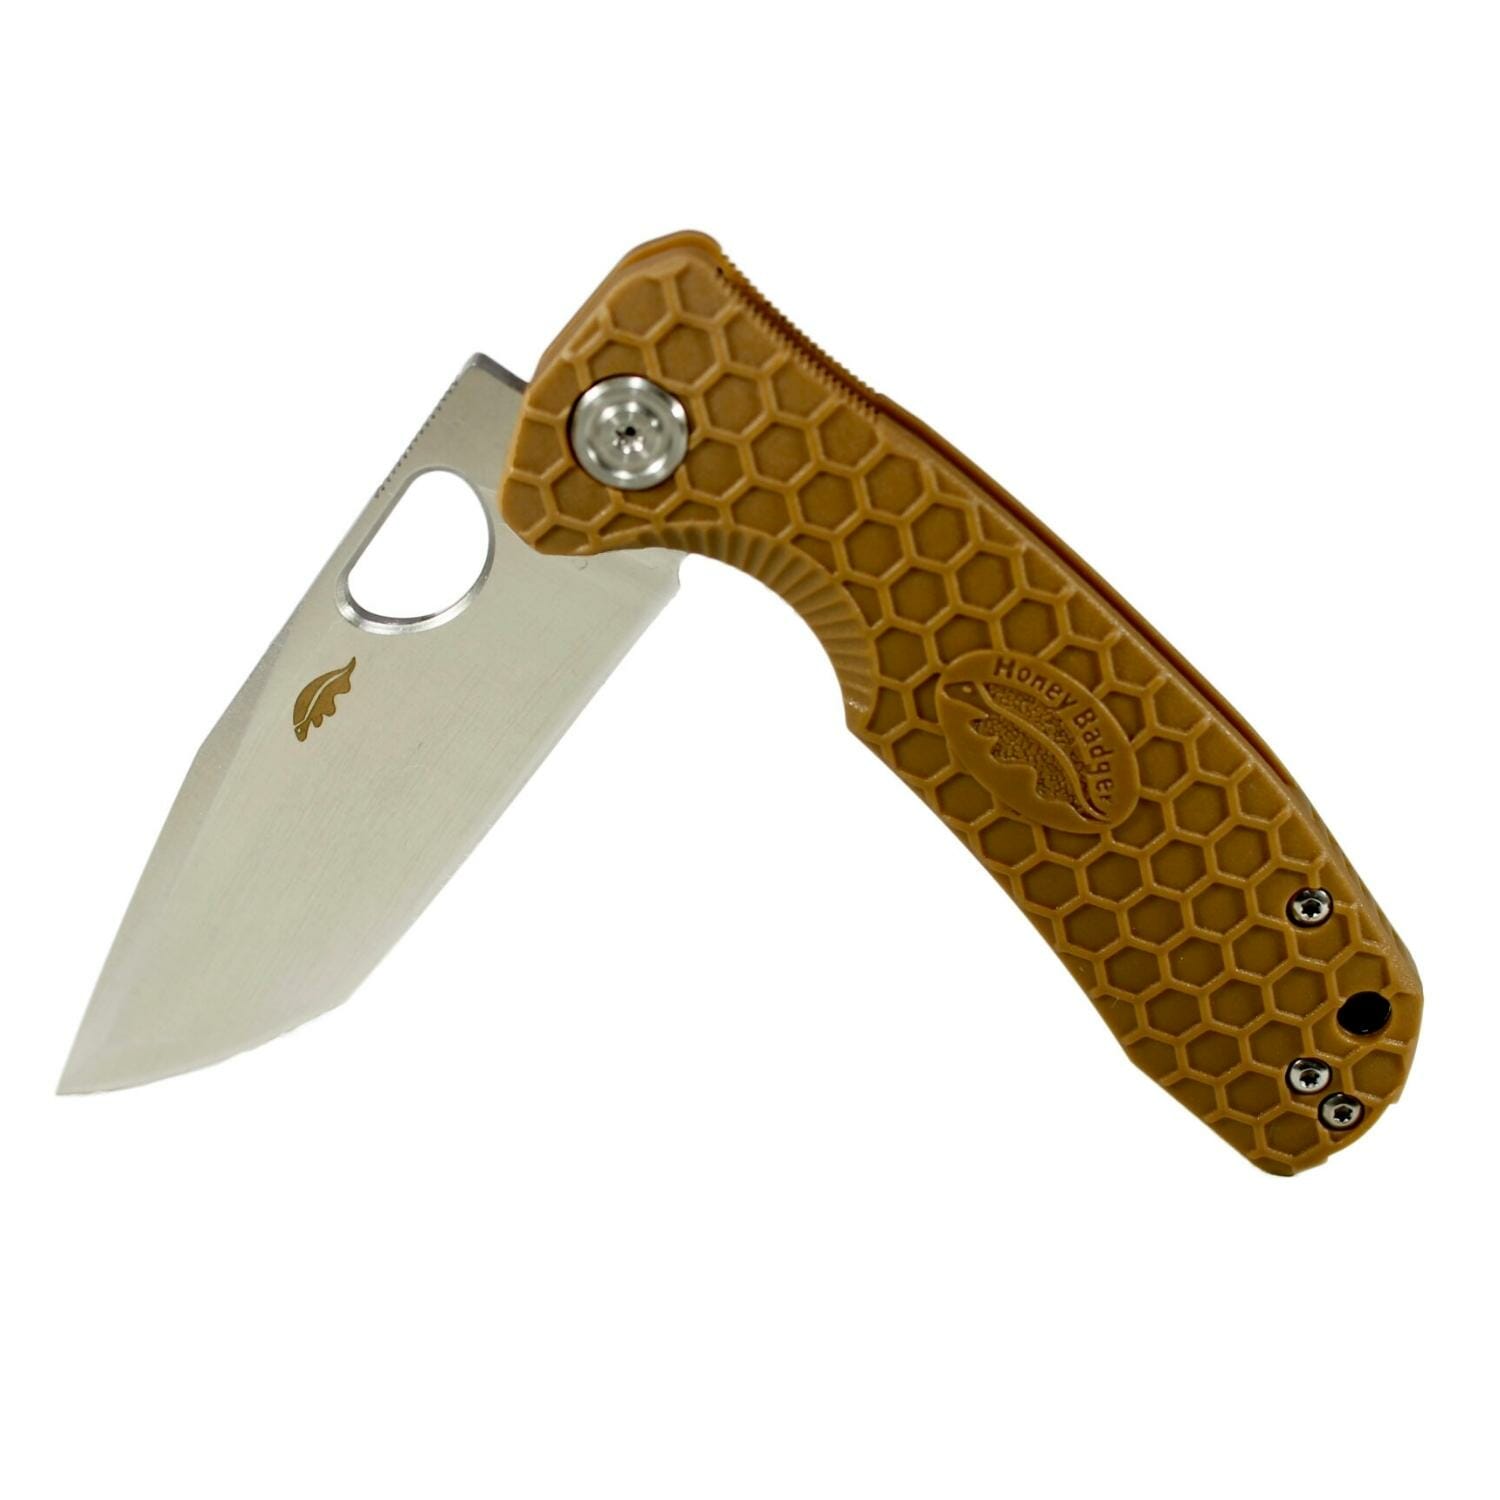 Work Sharp Guided Field Sharpener (WSGFS221) Honey Badger Pocket Knives.  8Cr13MoV, D2, 14C28N Budget EDC Flipper Pocket Knife with Pocket Clips